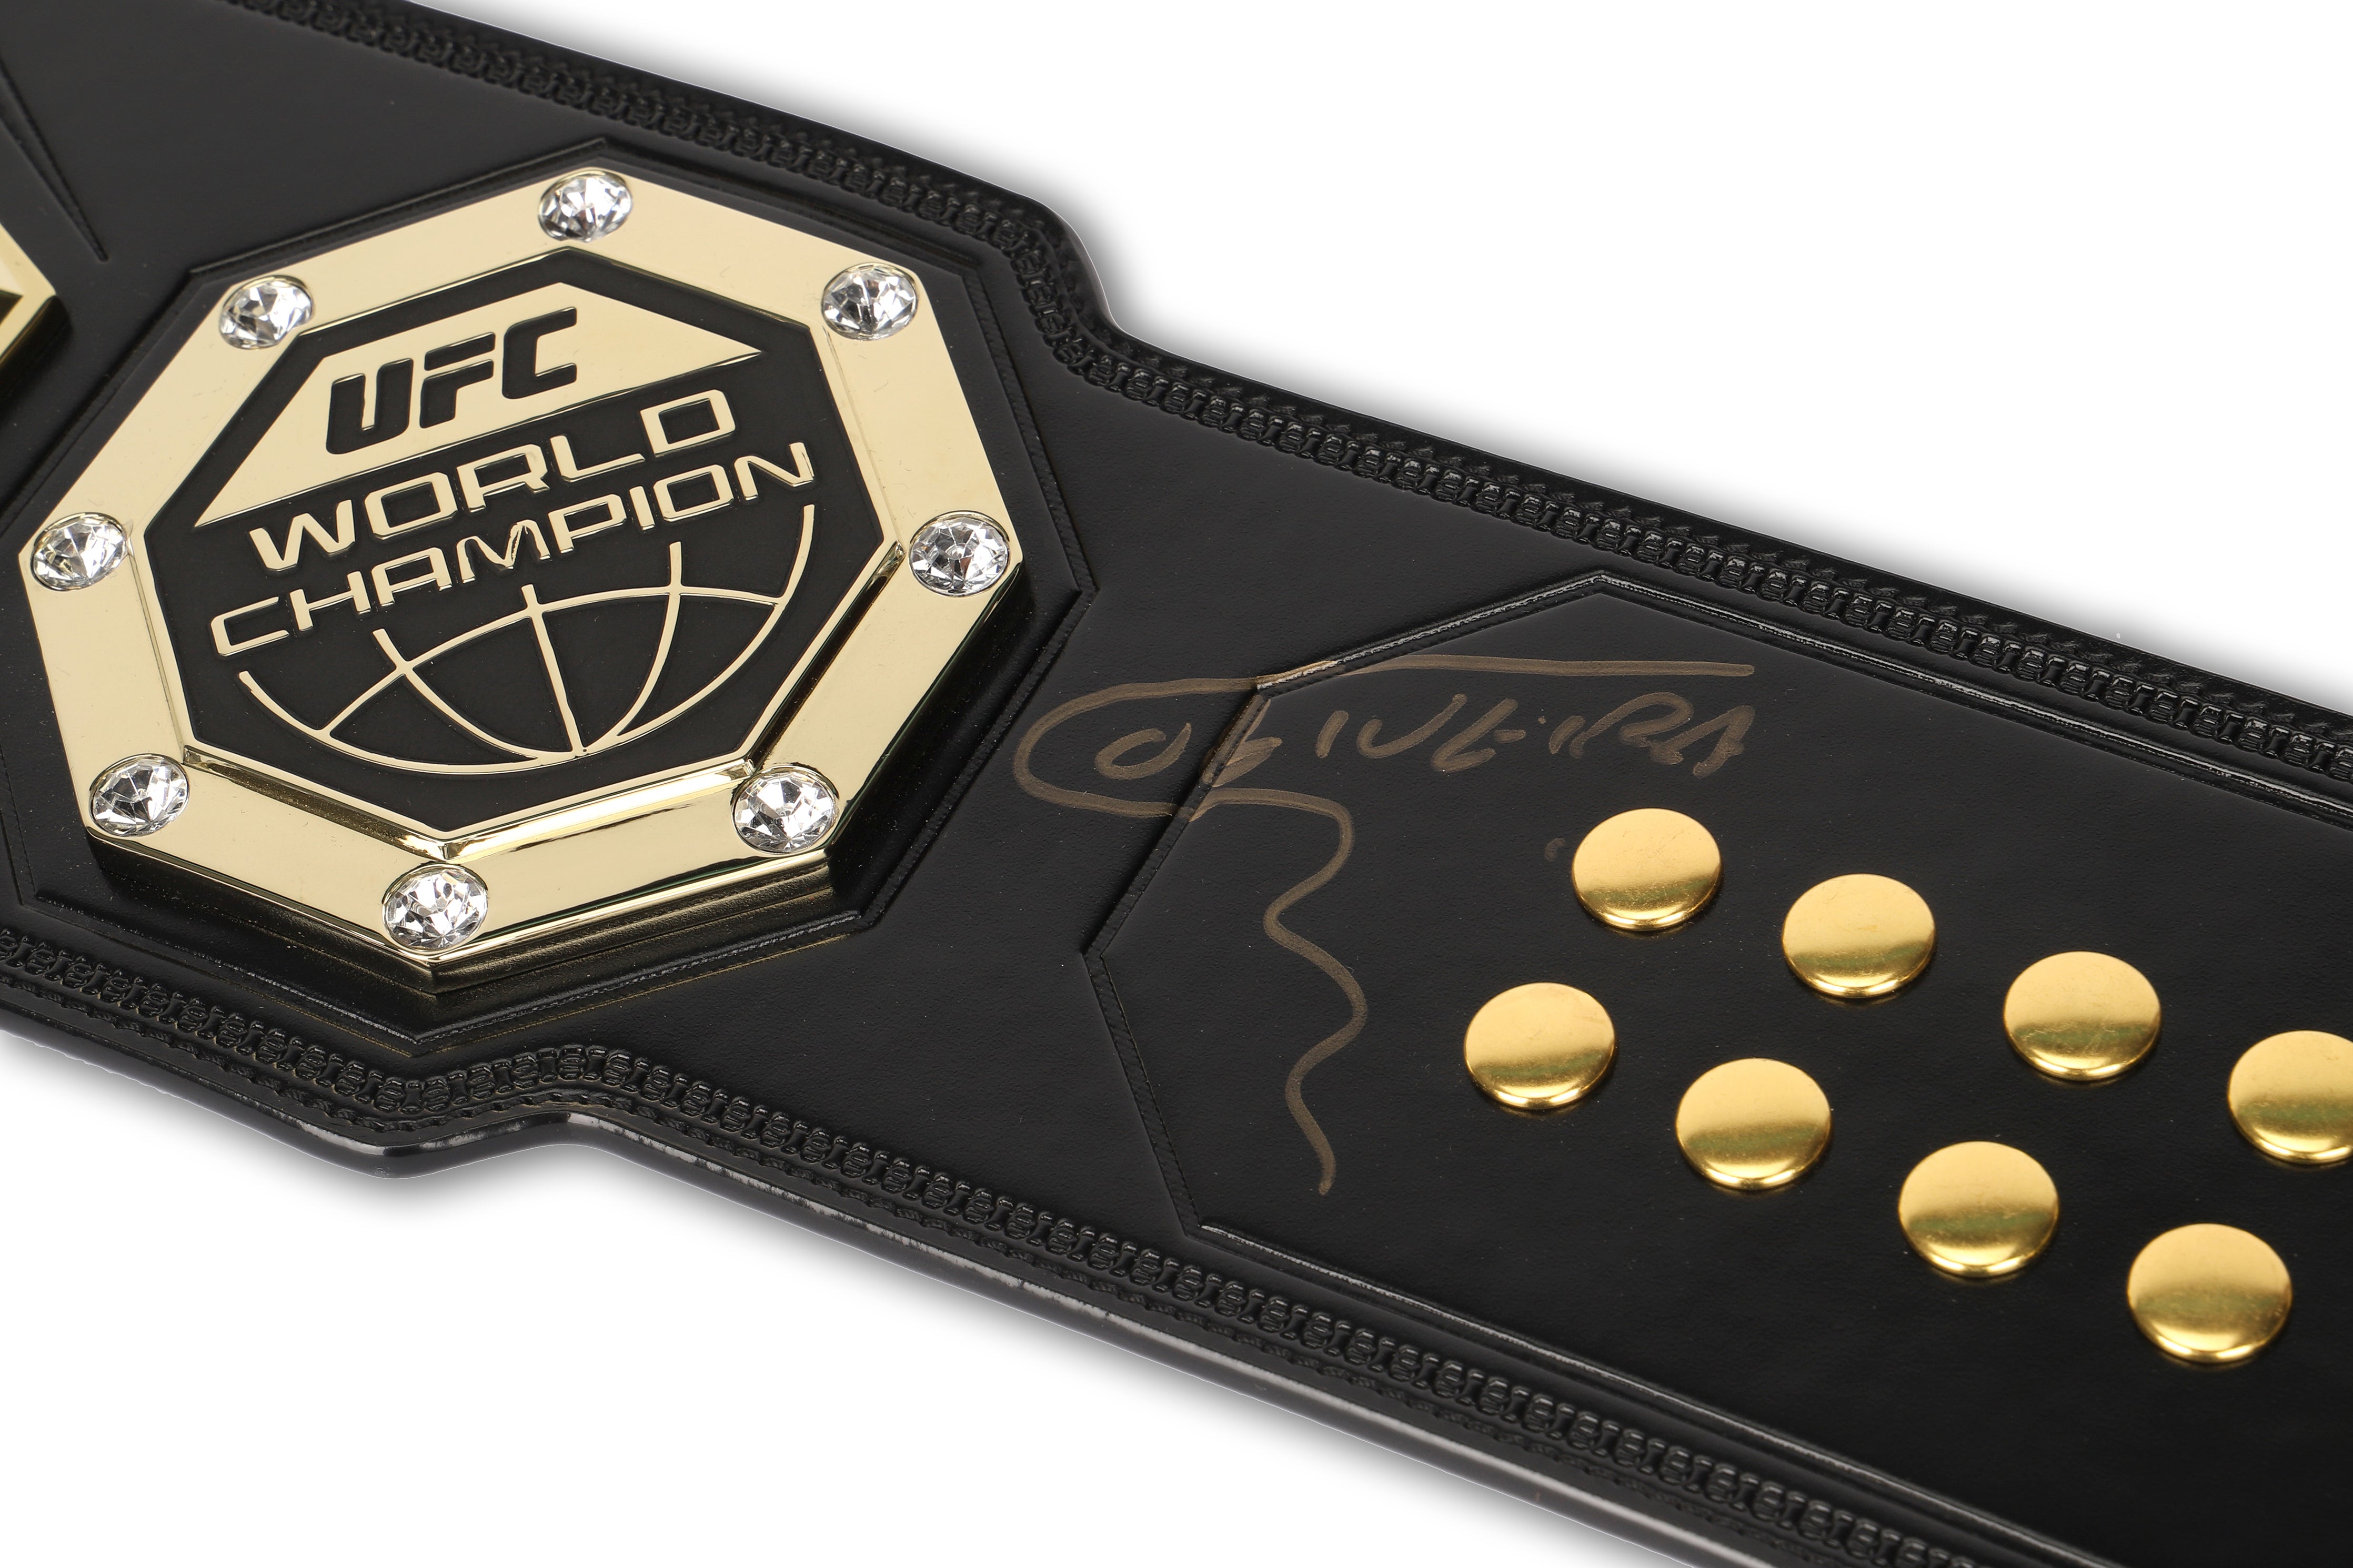 Charles Oliveira Signed UFC Legacy Championship Replica Belt